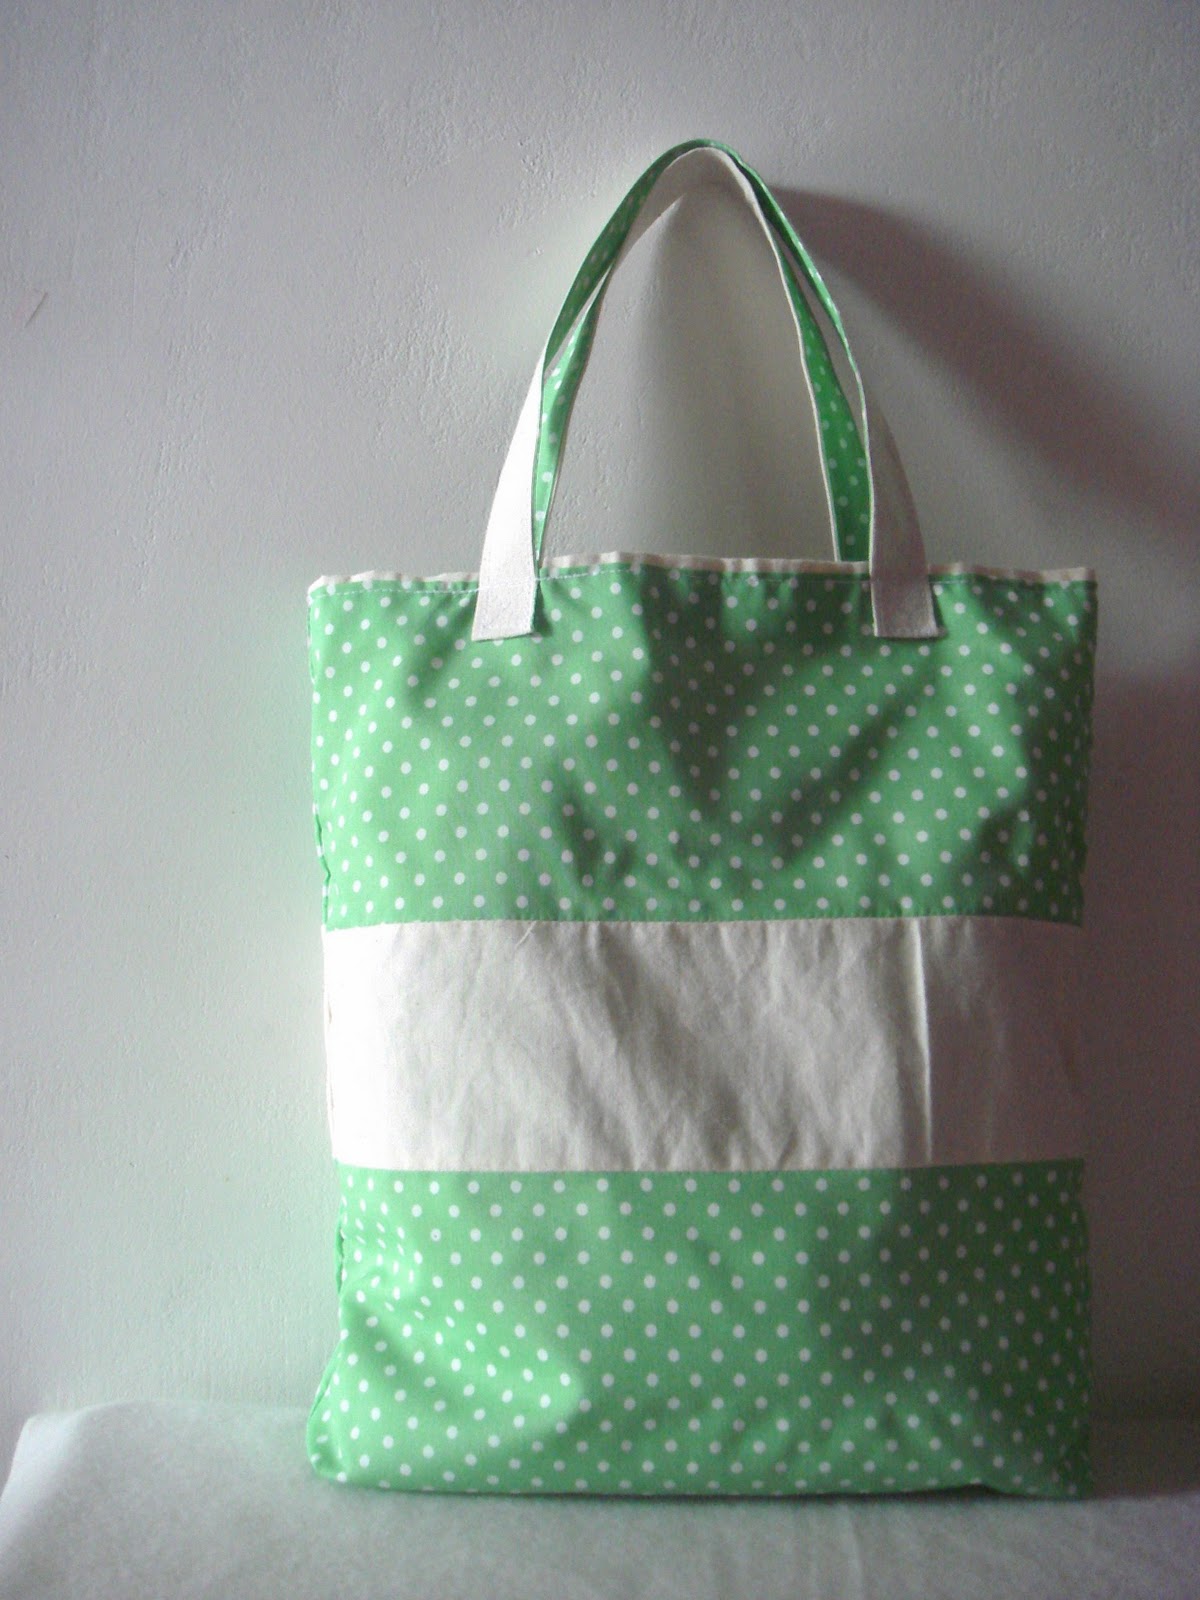 Mynn Q's Handmade: [SOLD] Green Polka Dots Tote Bag